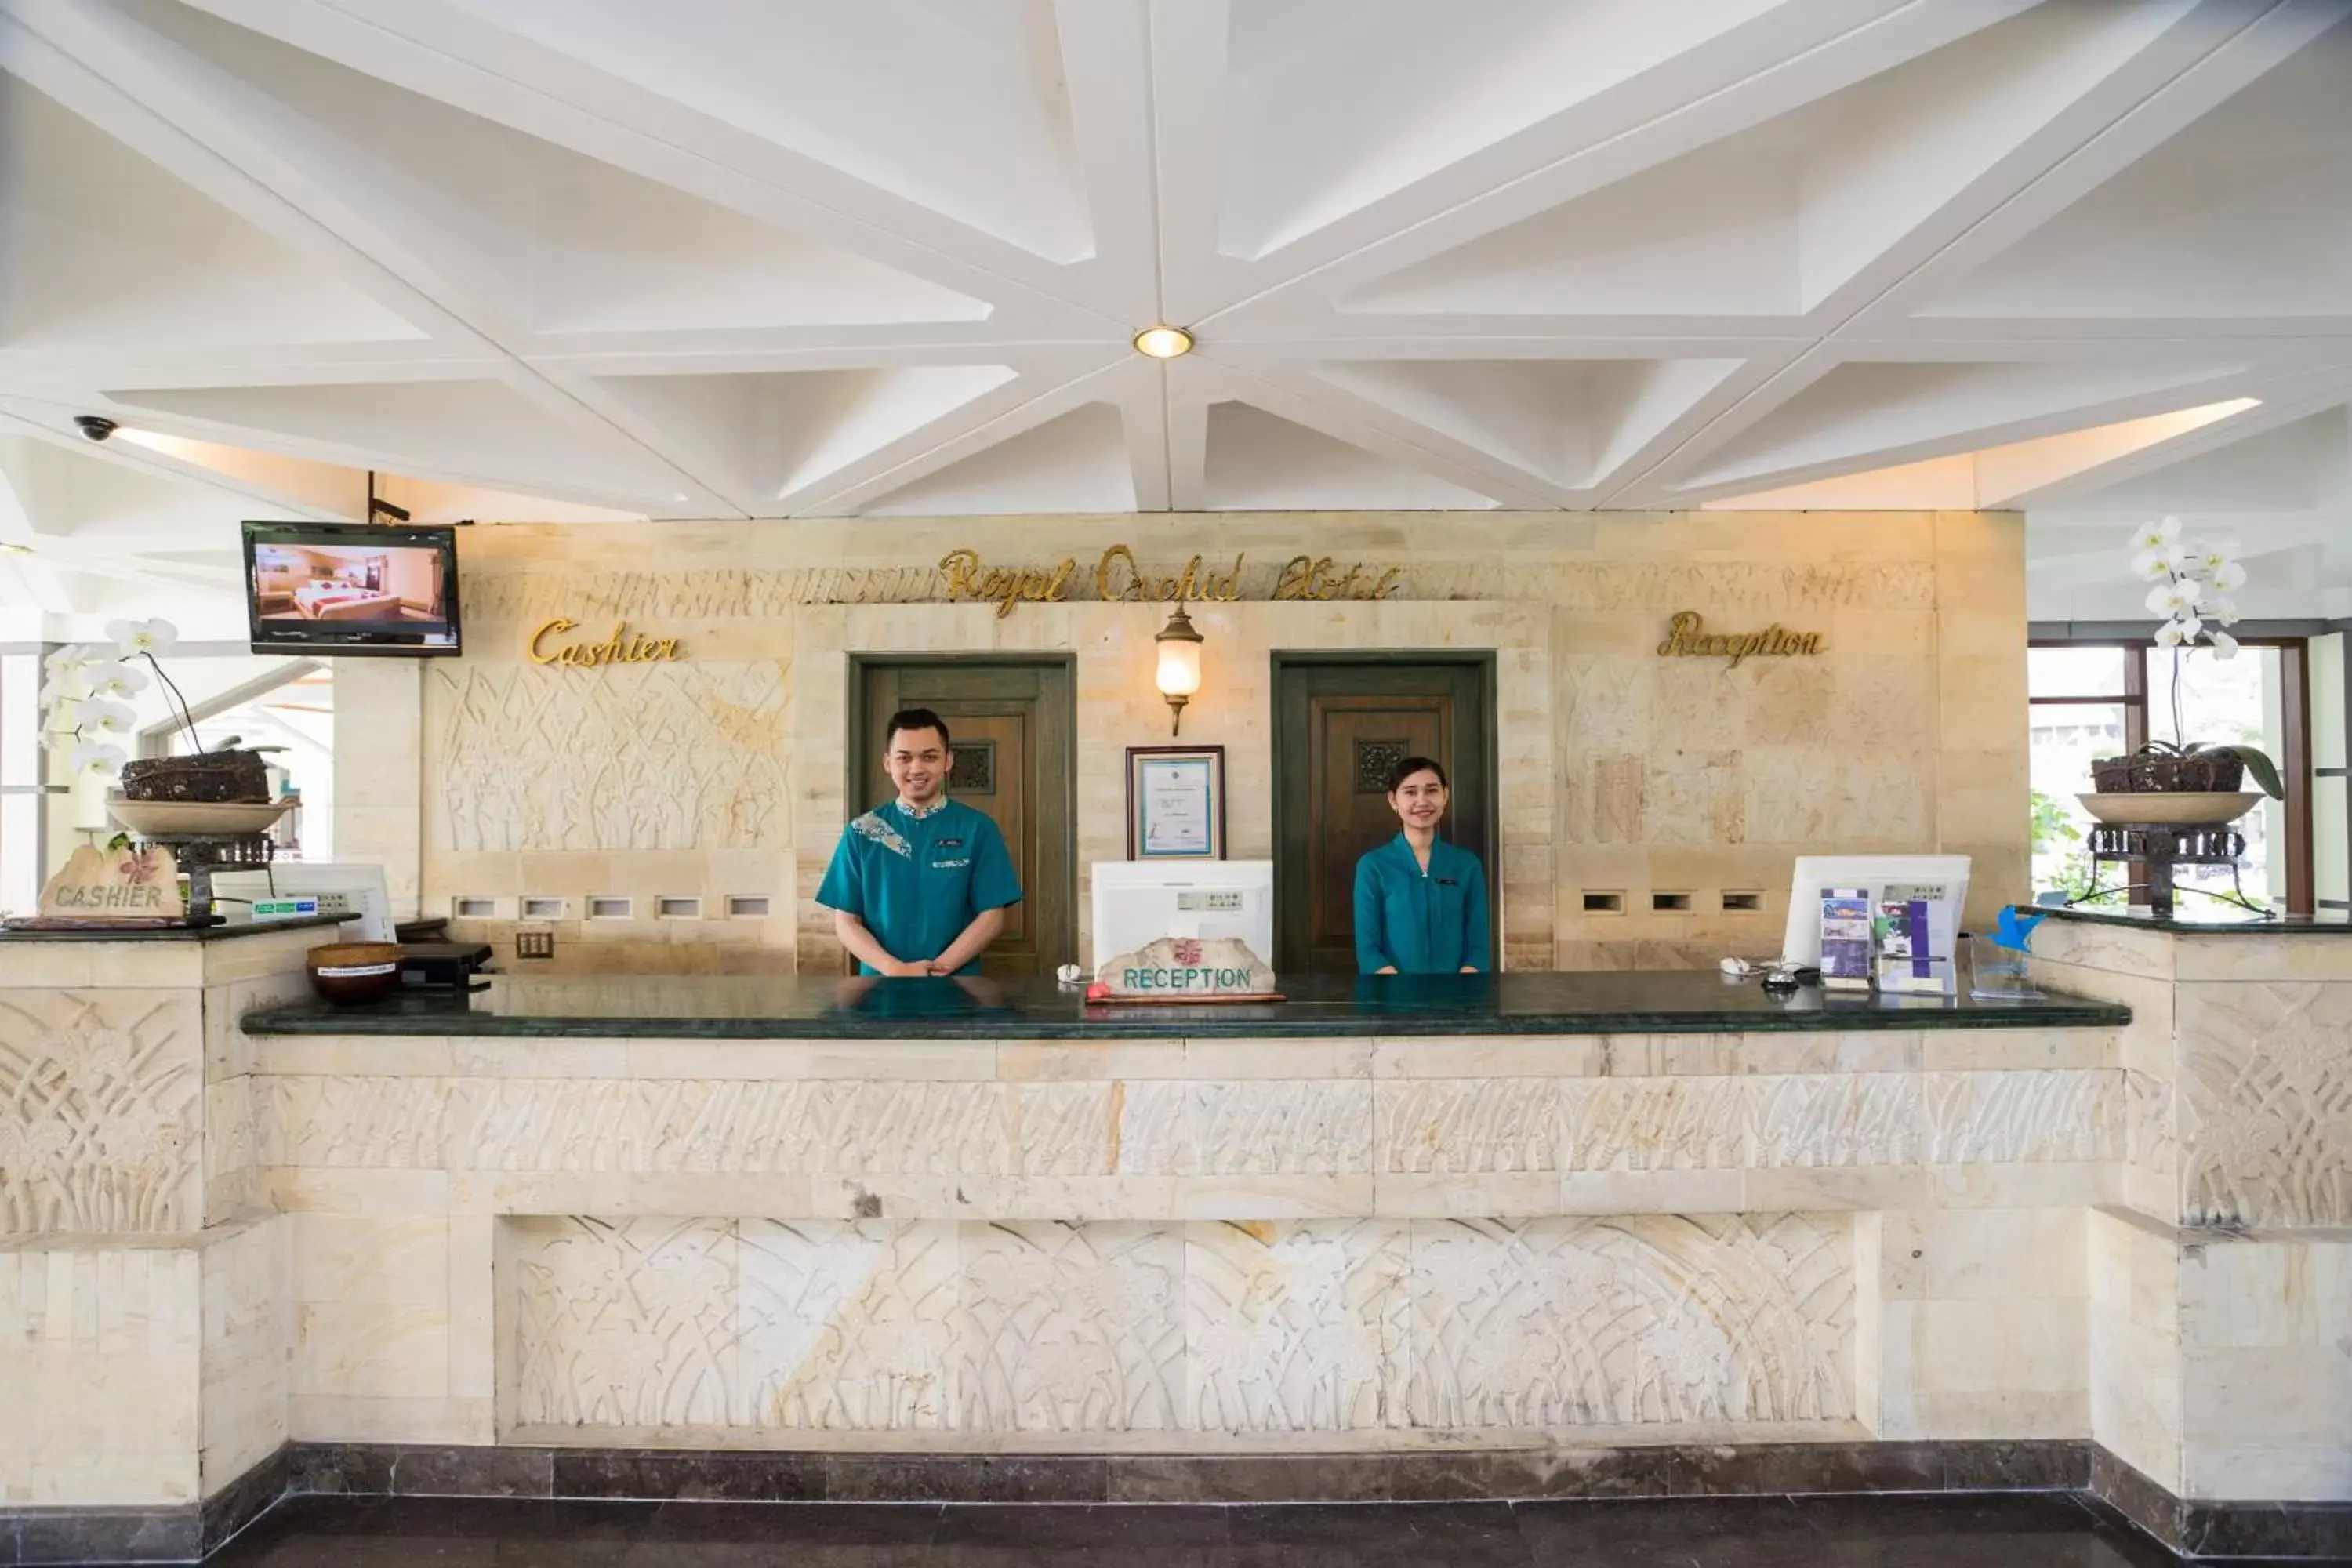 Lobby or reception in Royal Orchids Garden Hotel & Condominium